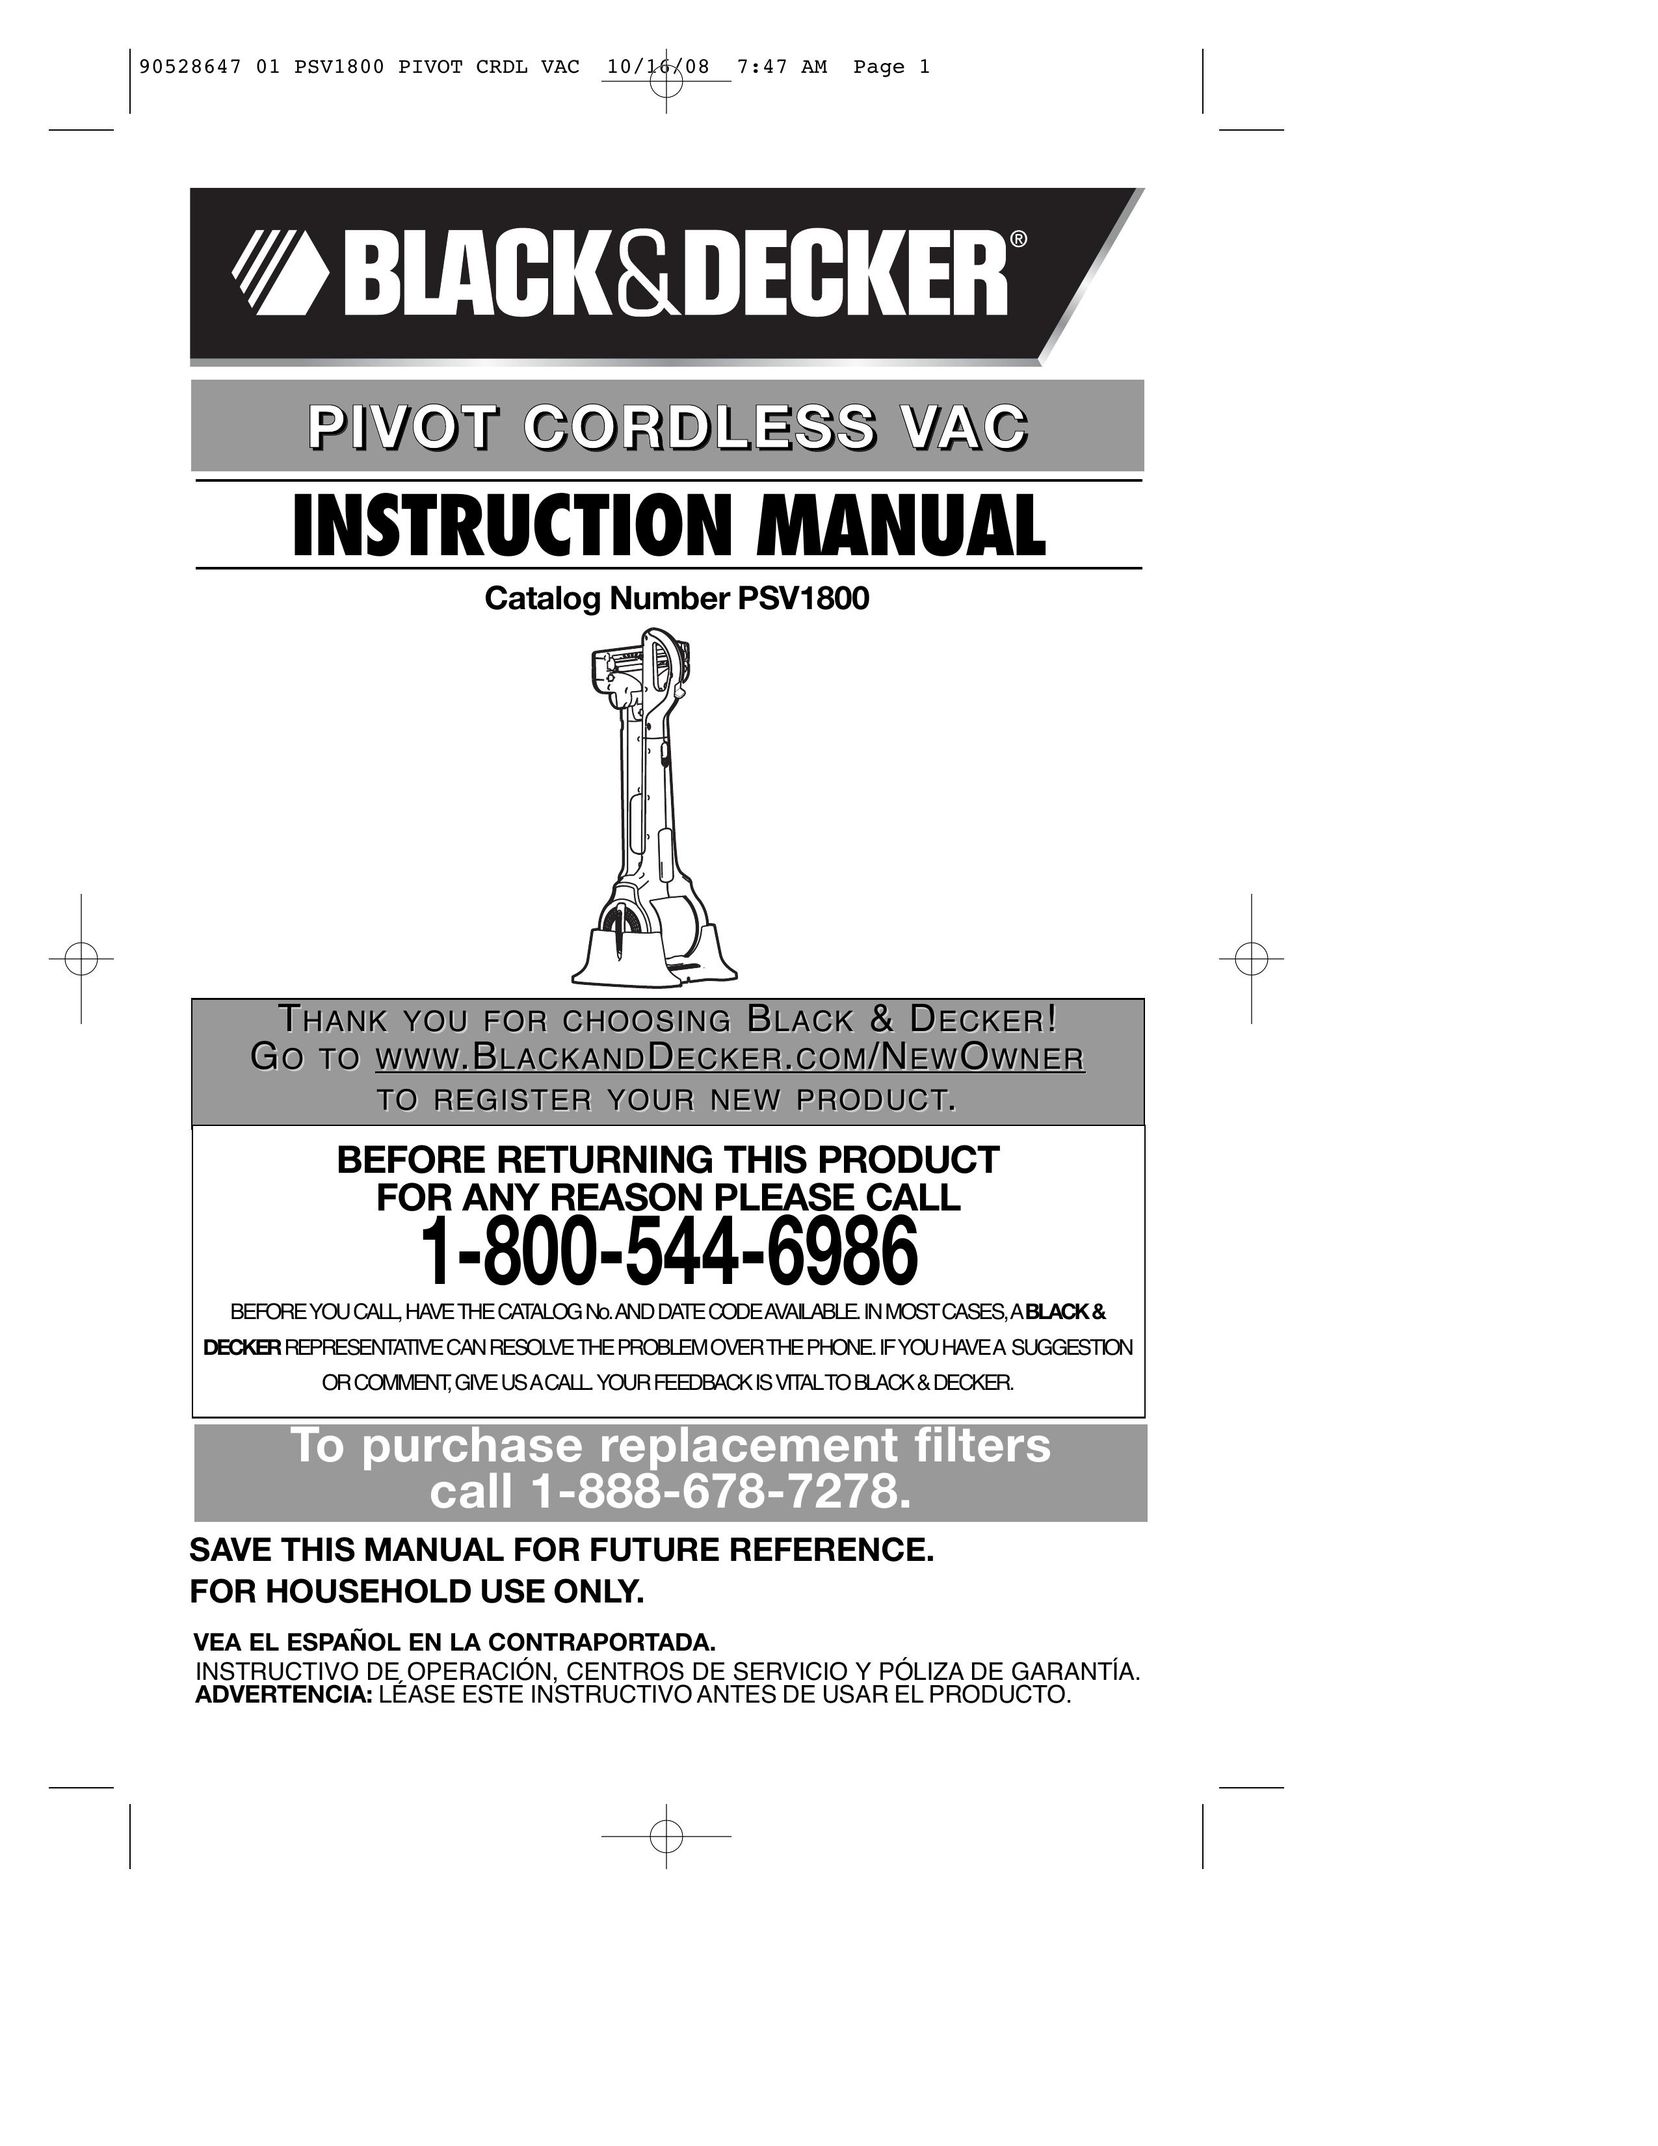 Black & Decker 90528647 Vacuum Cleaner User Manual